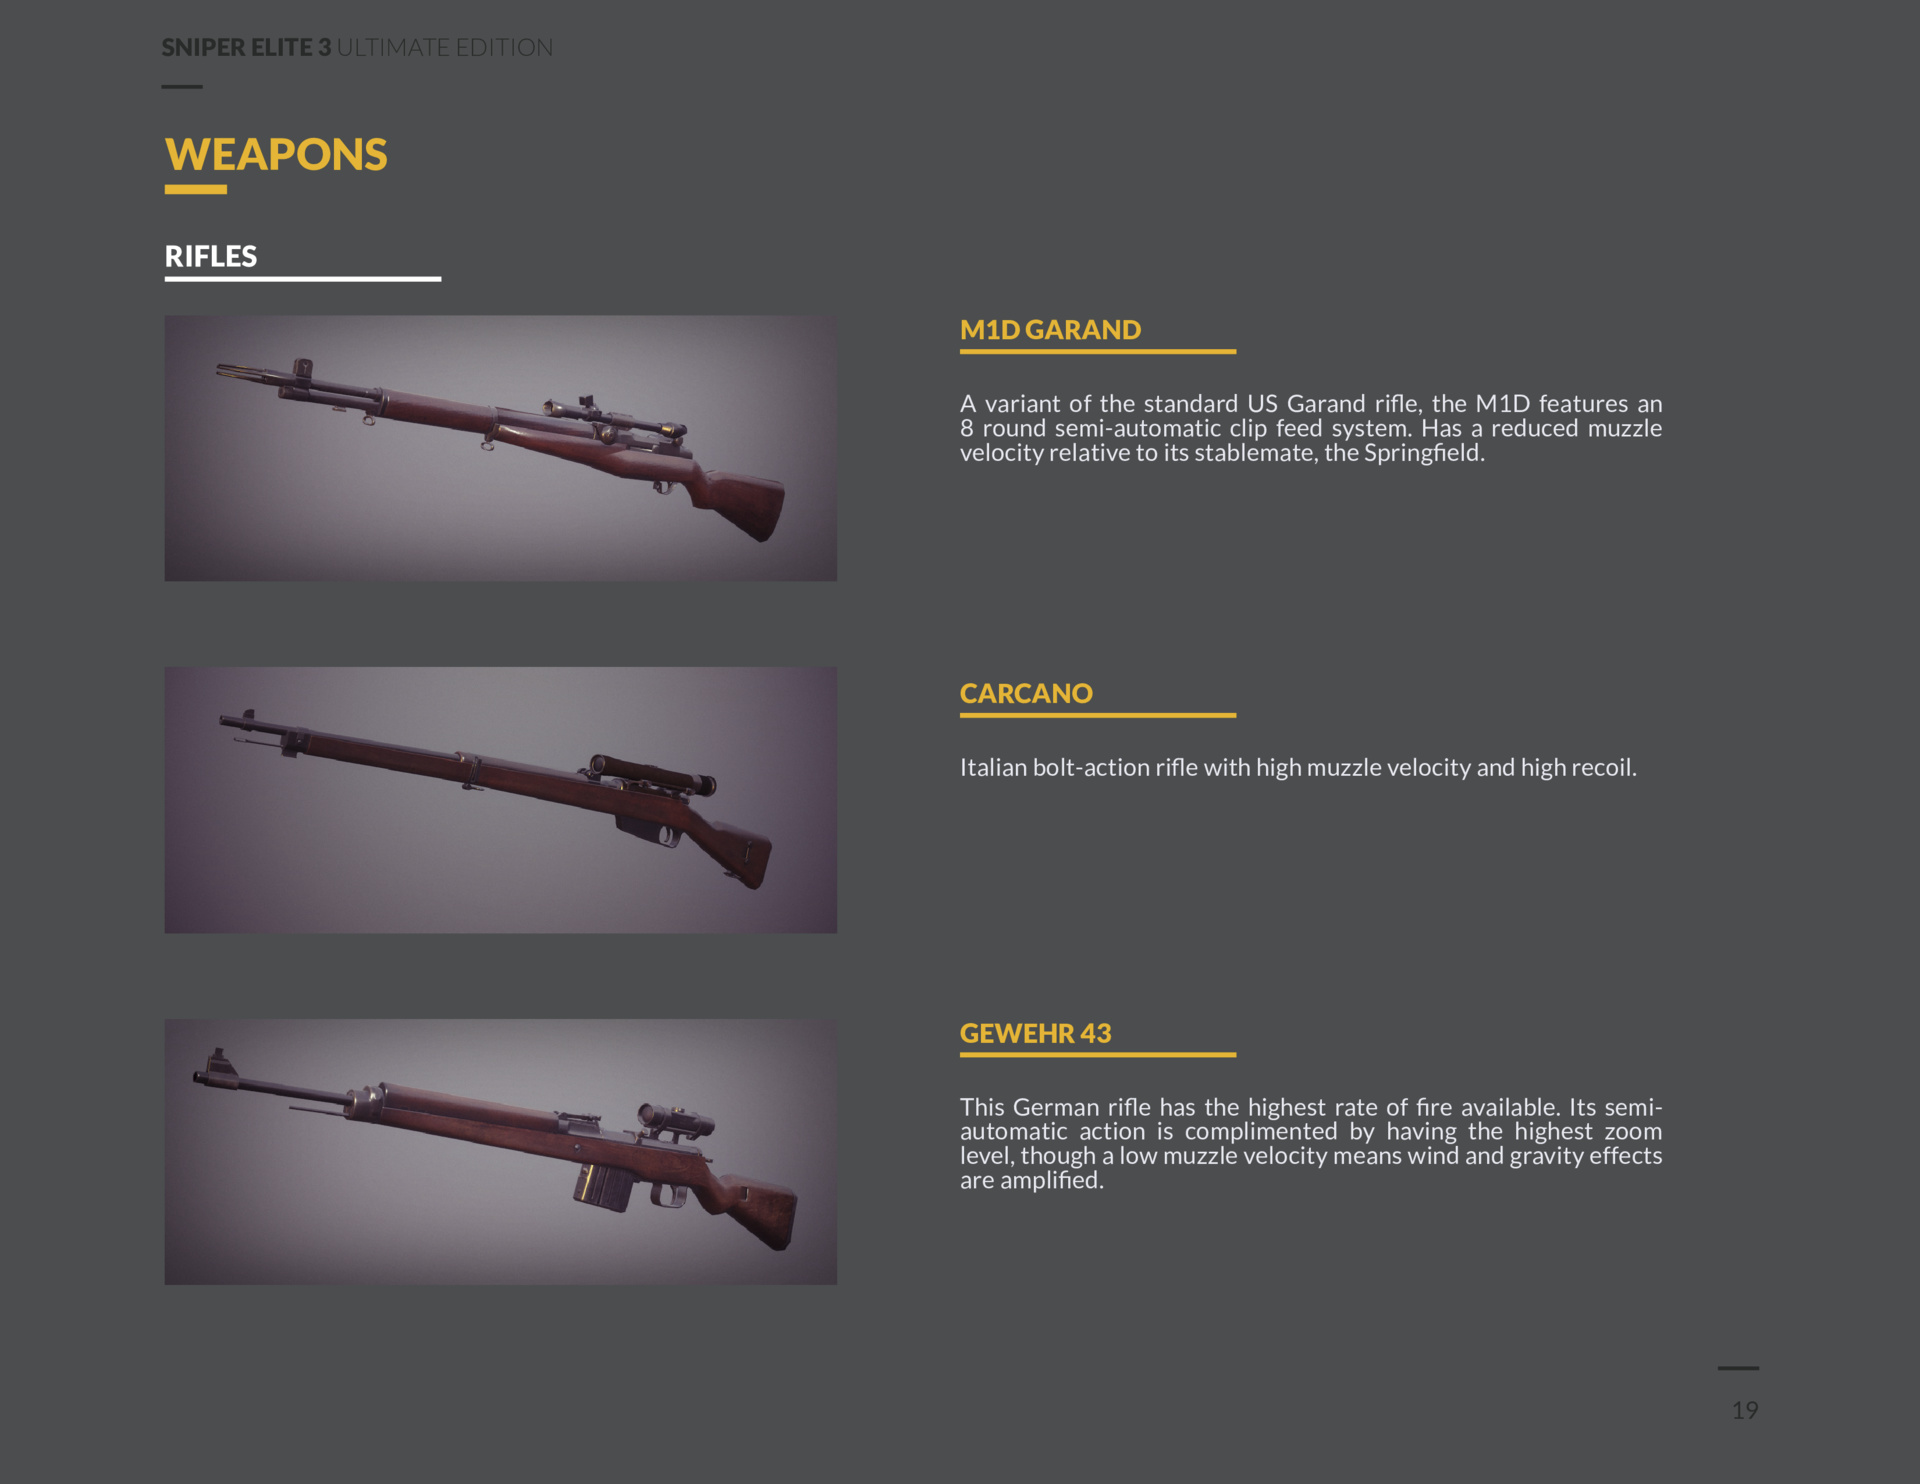 sniper elite 3 rifles